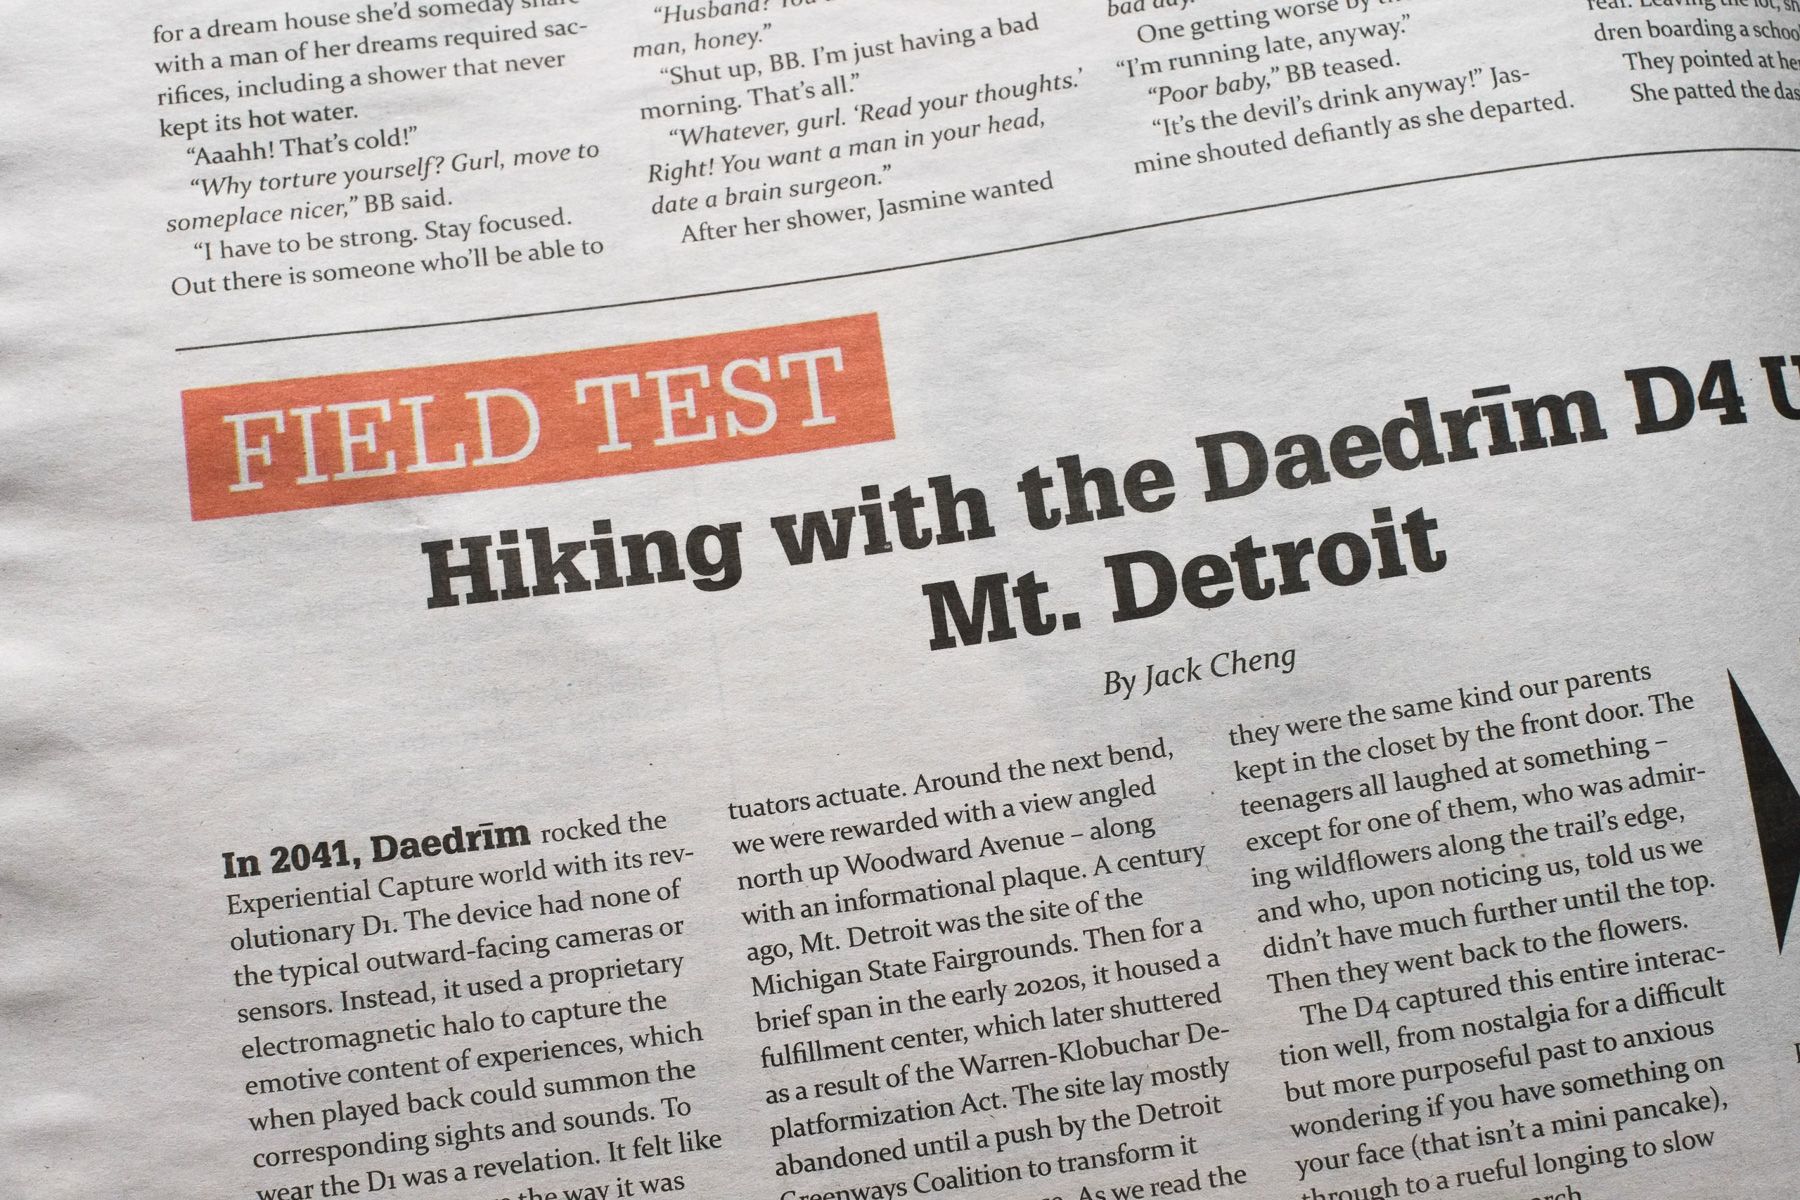 Close-up of orange “Field Test” design element above headline.